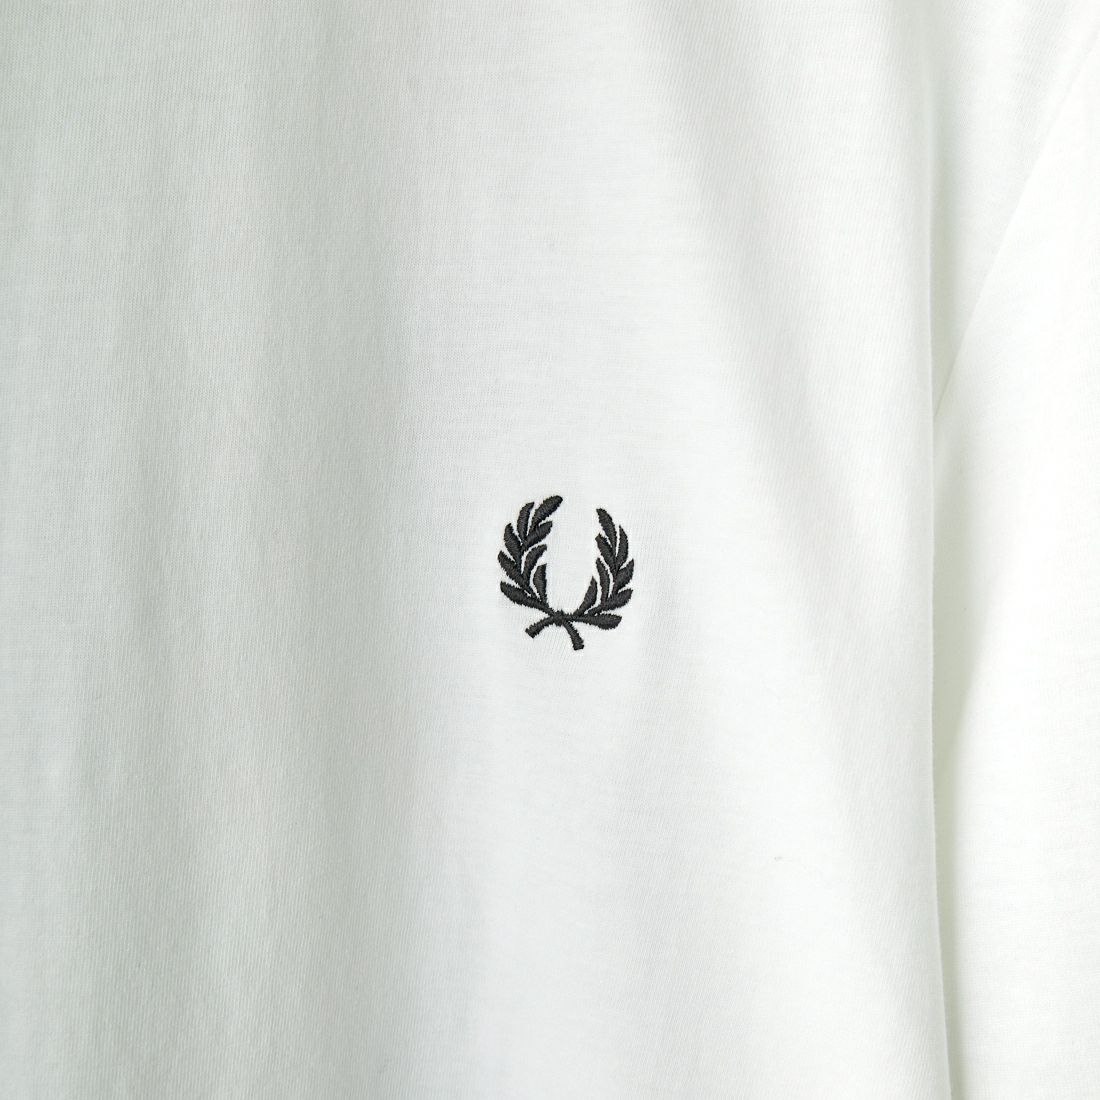 FRED PERRY [フレッドペリー]  ビックローレルリースロゴ バックプリントTシャツ [M7784-JF] 100 WHITE